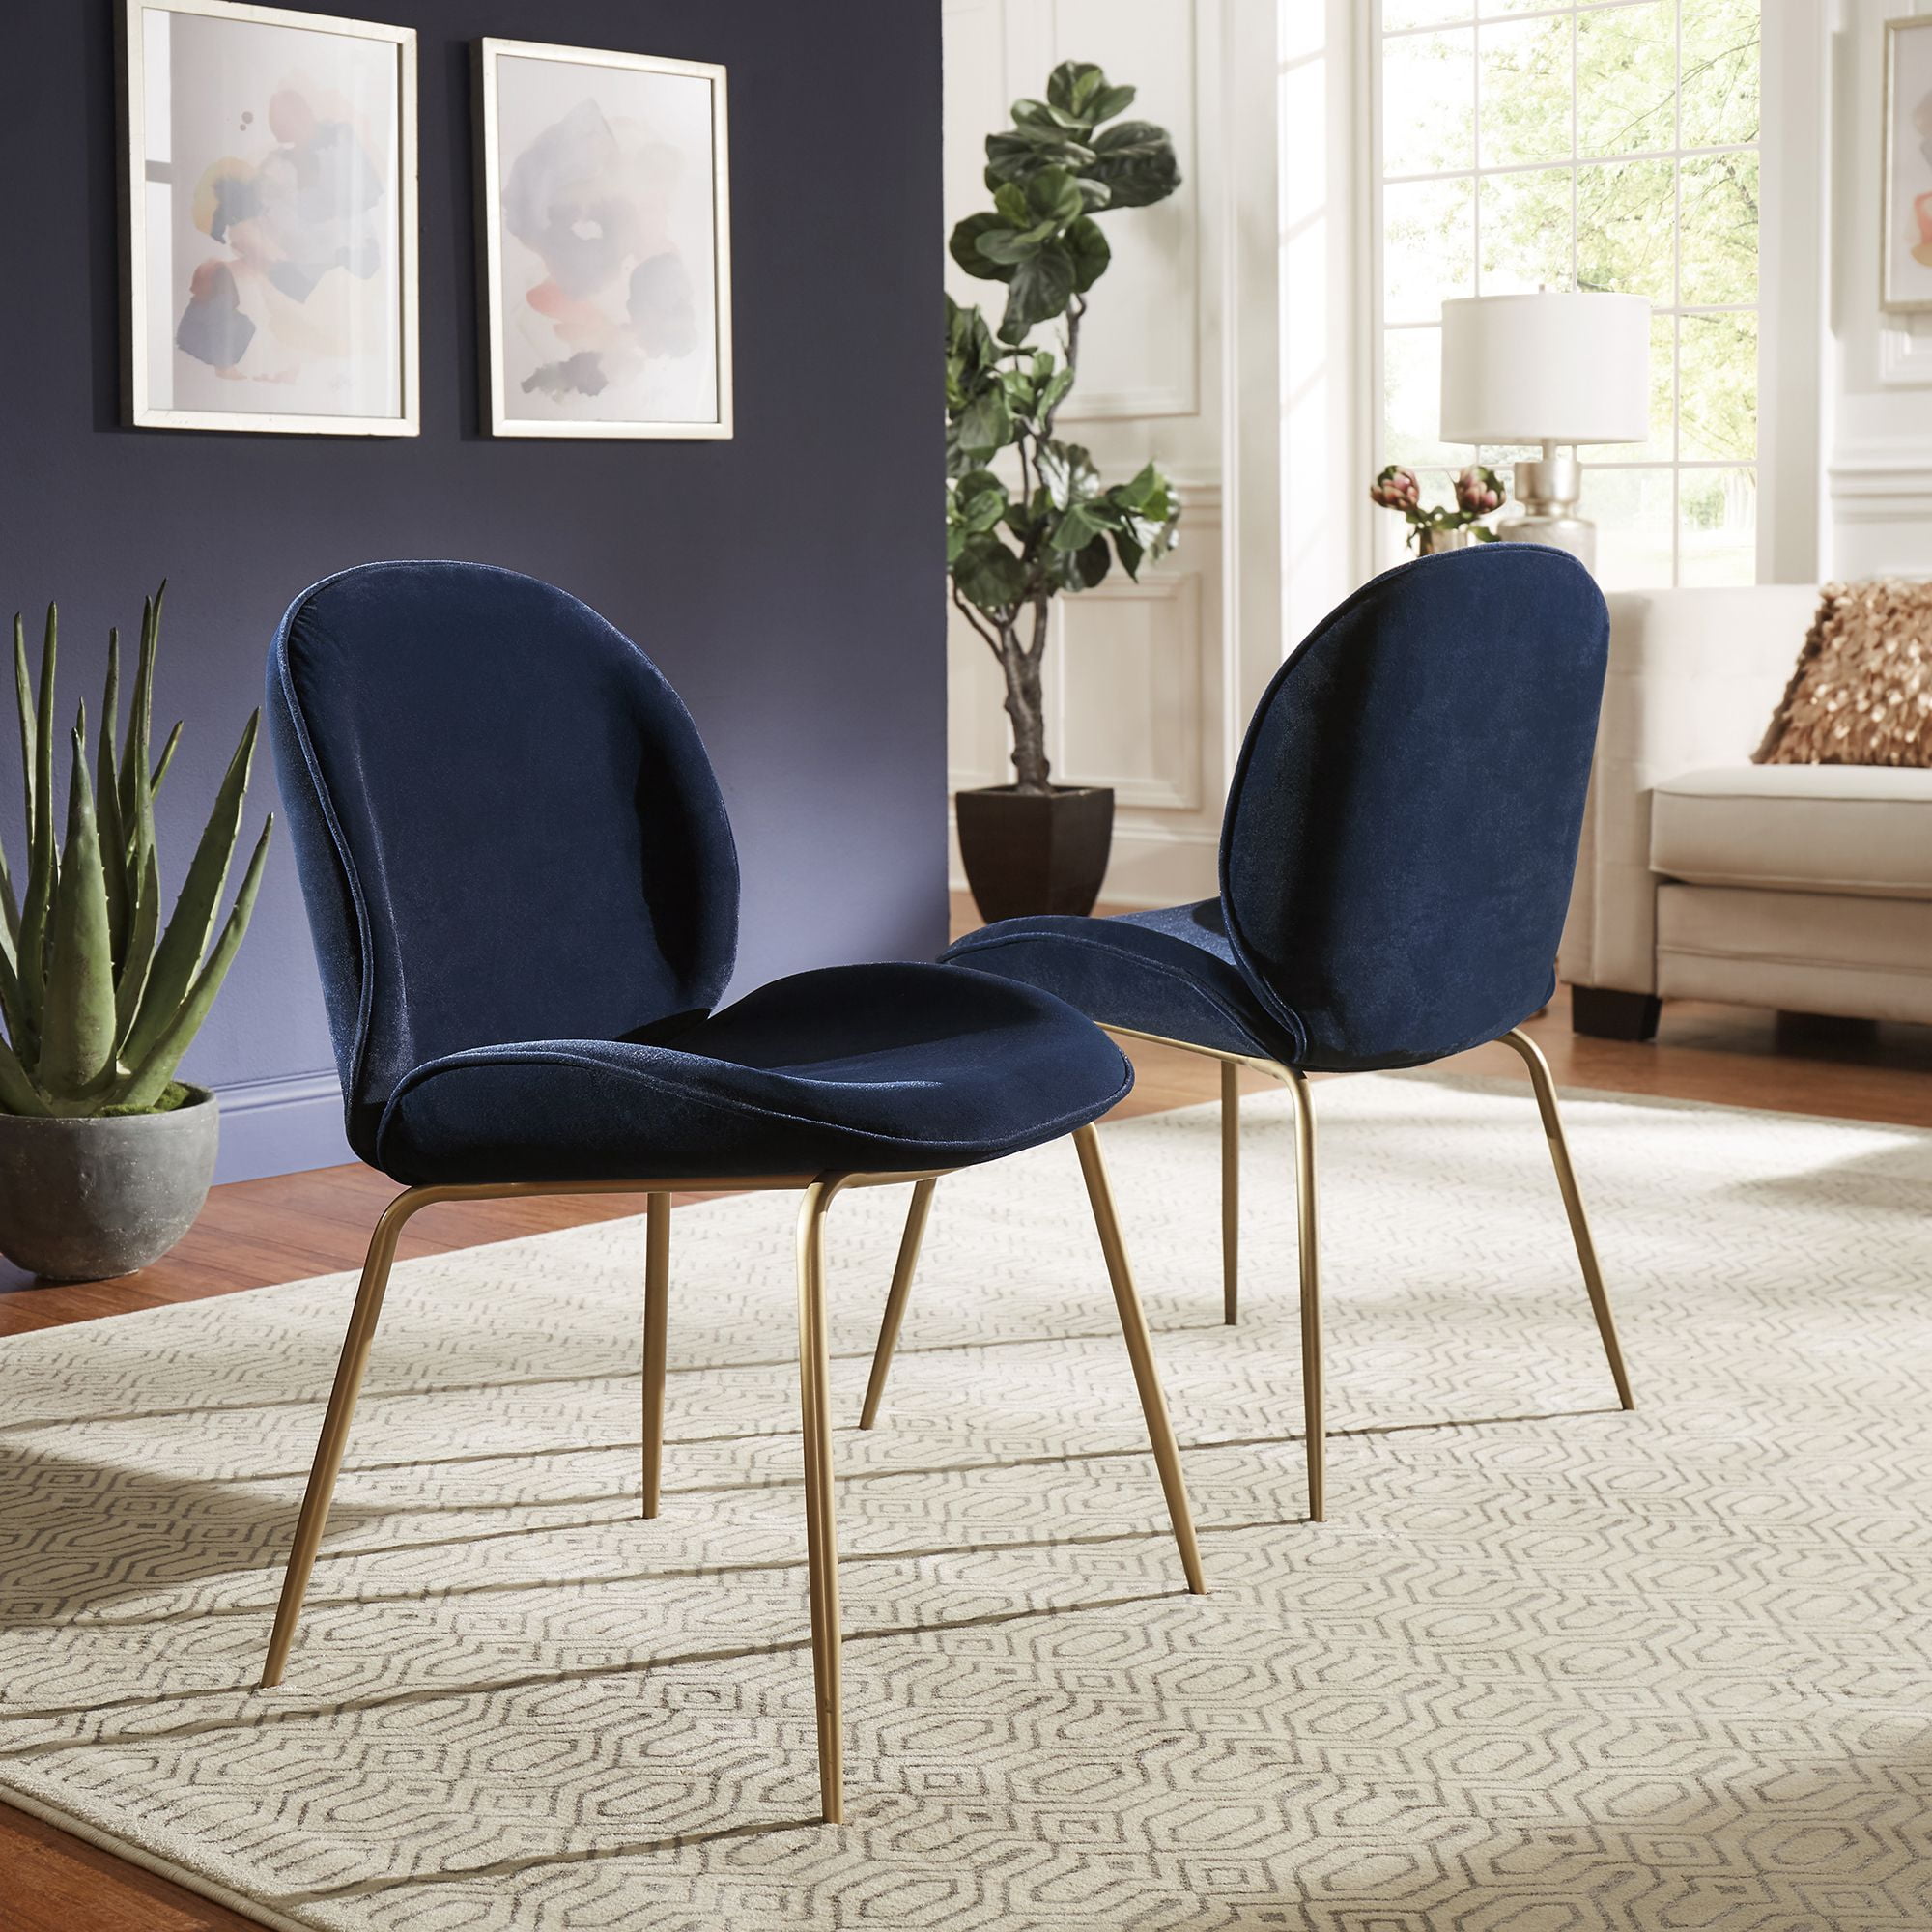 HomyCasa Set of 2 Upholstered Dining Chairs Velvet Fabric Seat Pad Wood Print Metal Legs Grey